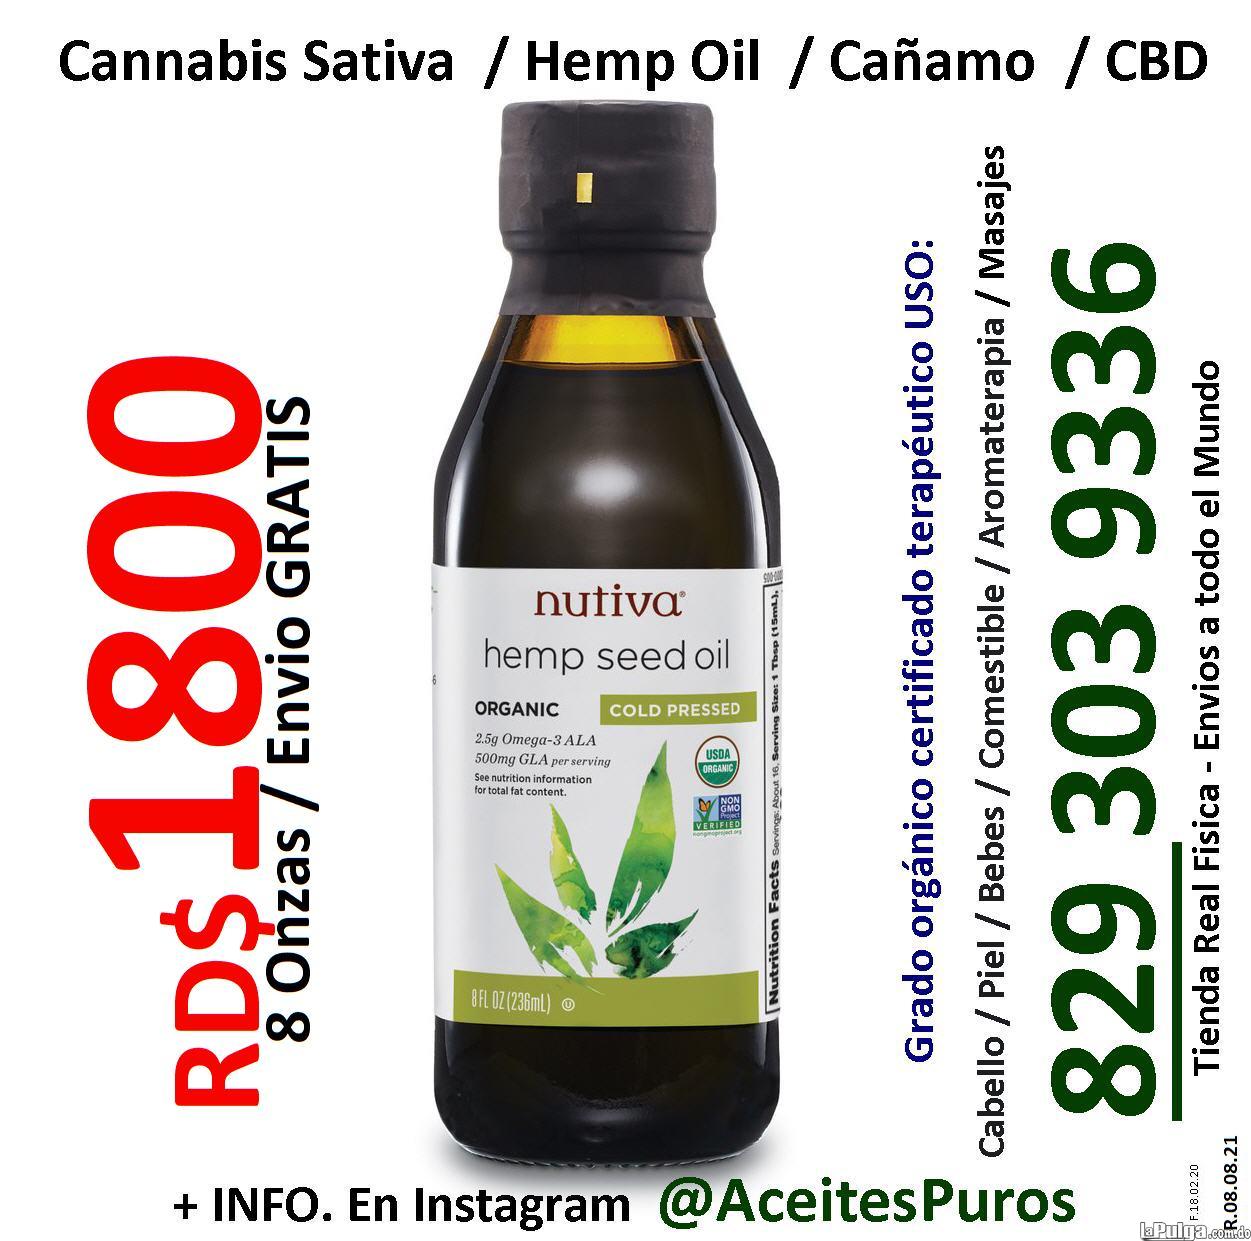 Aceite puro genuino organico nutiva de cannabis sativa cañamo hemp oi Foto 7110406-2.jpg